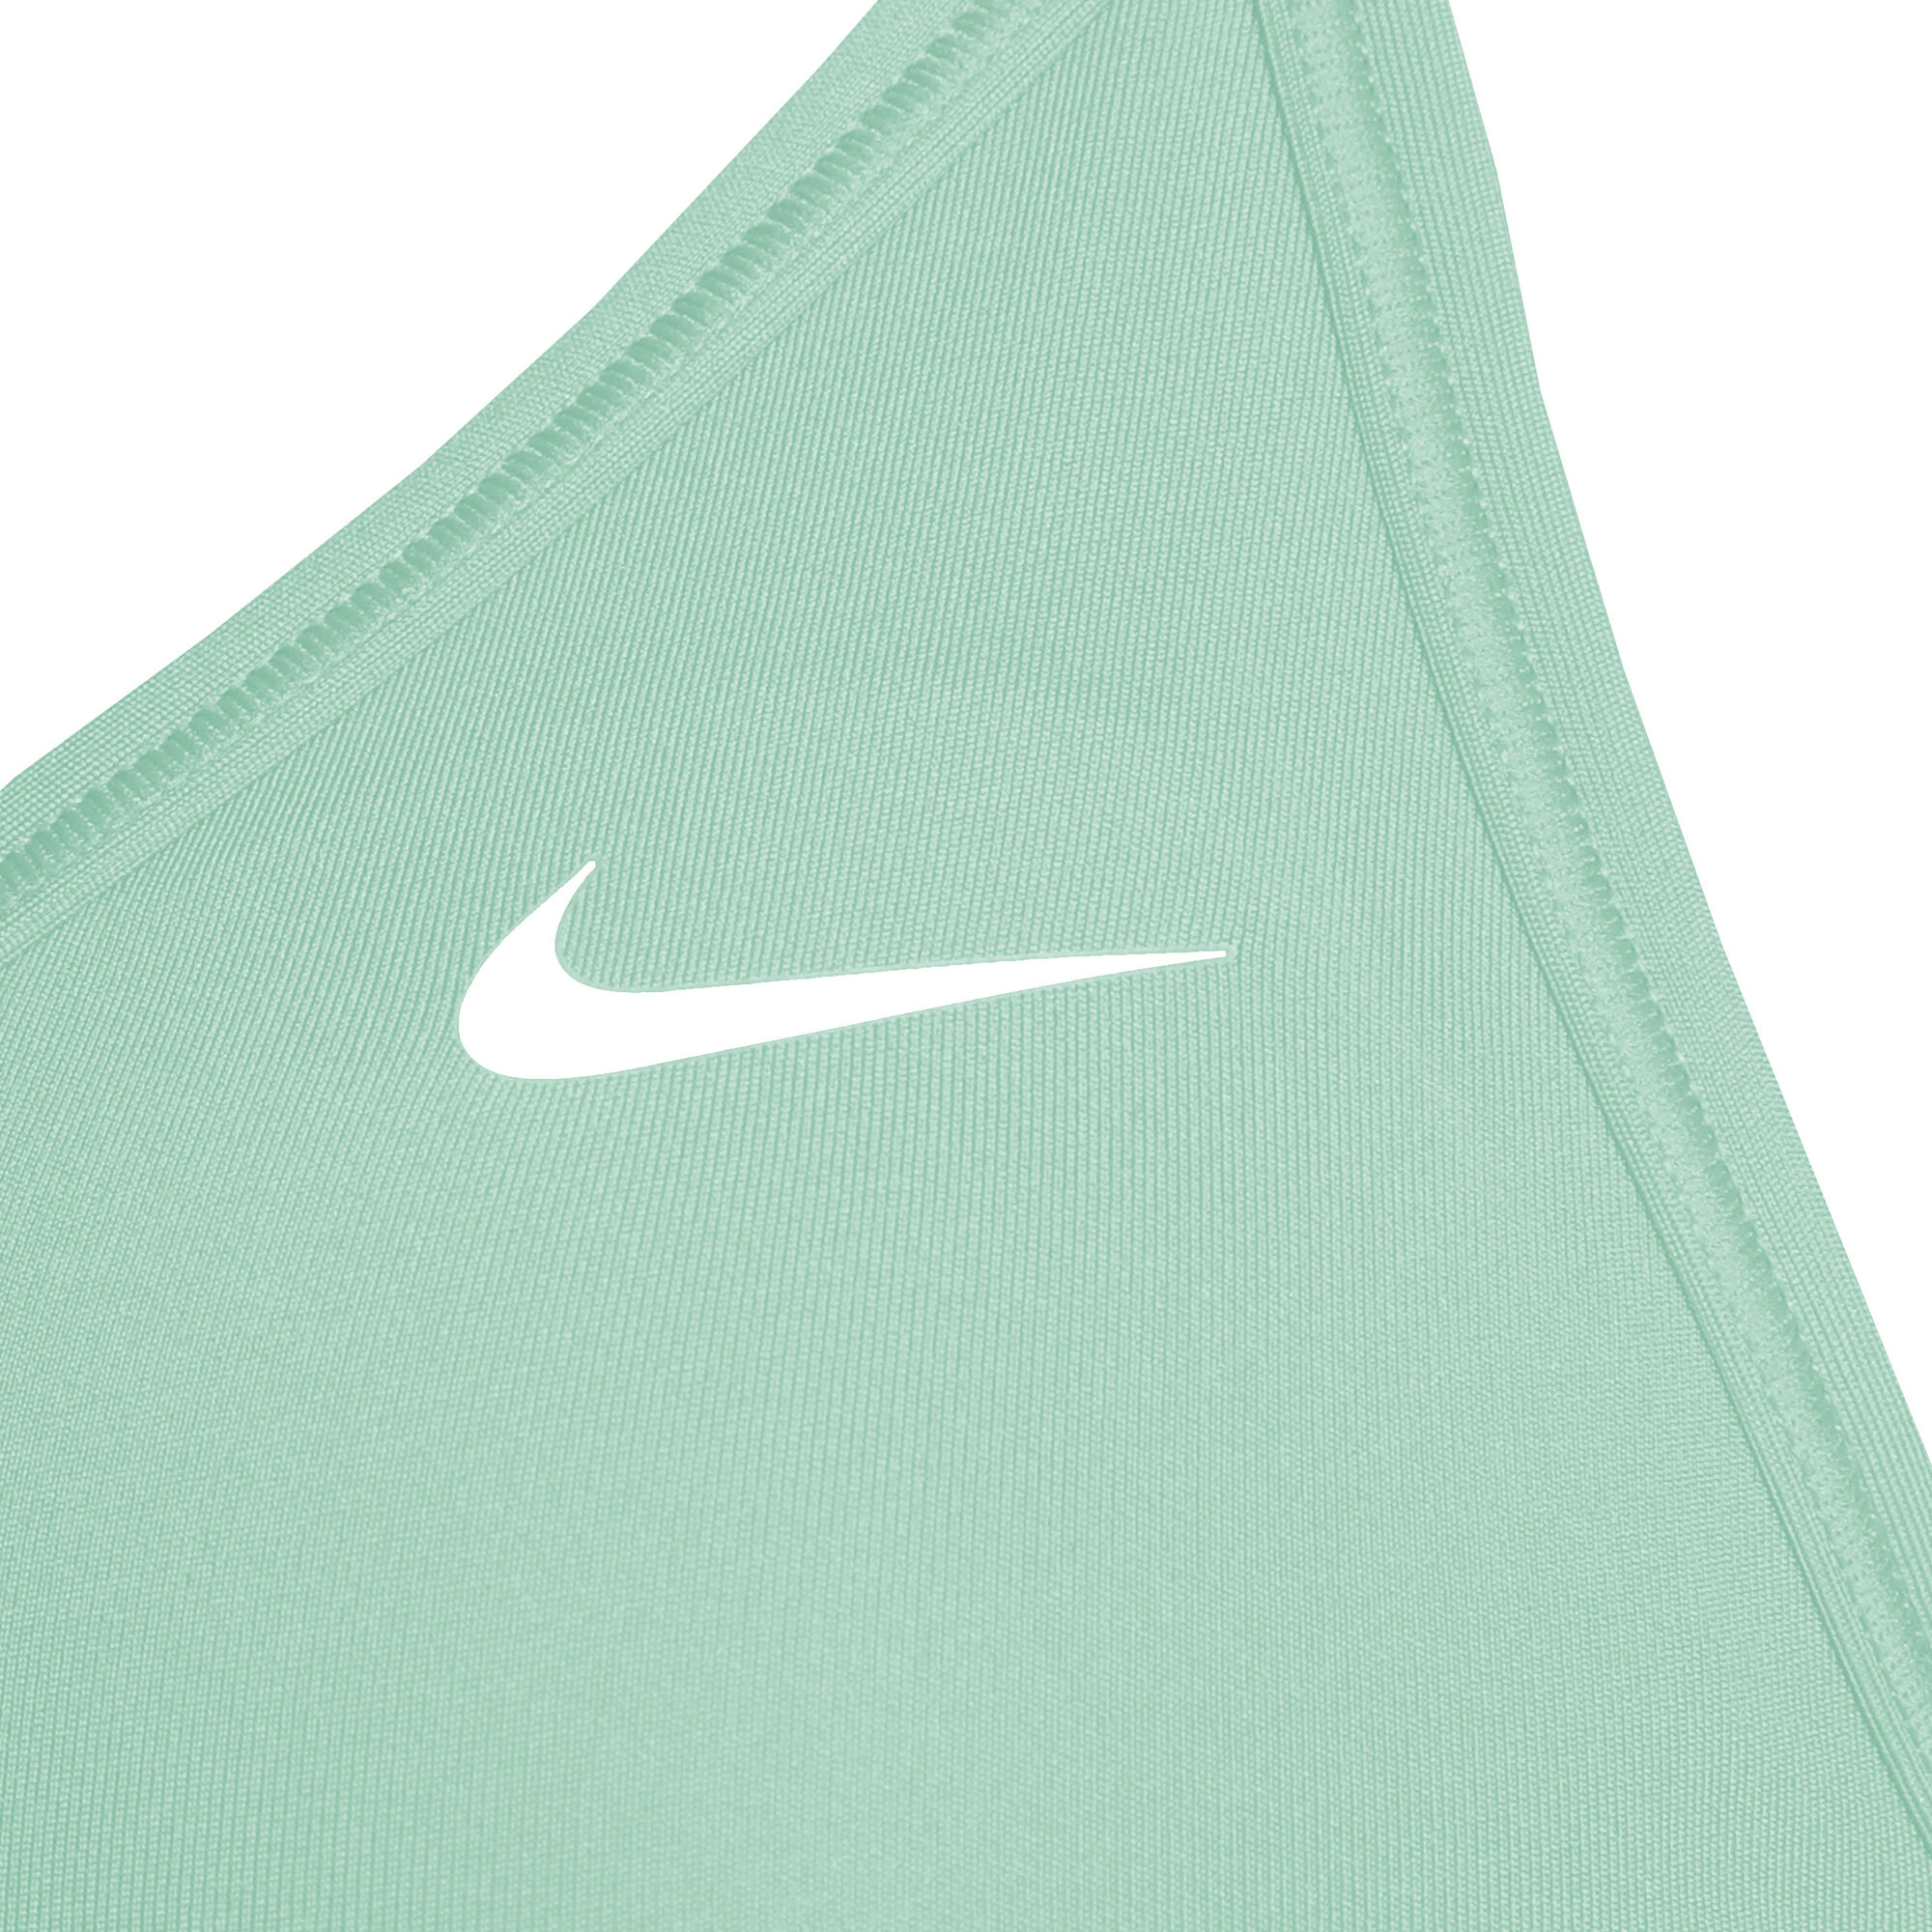 Buy Nike Indy V-Neck Light Support Sports Bras Women Mint, White online